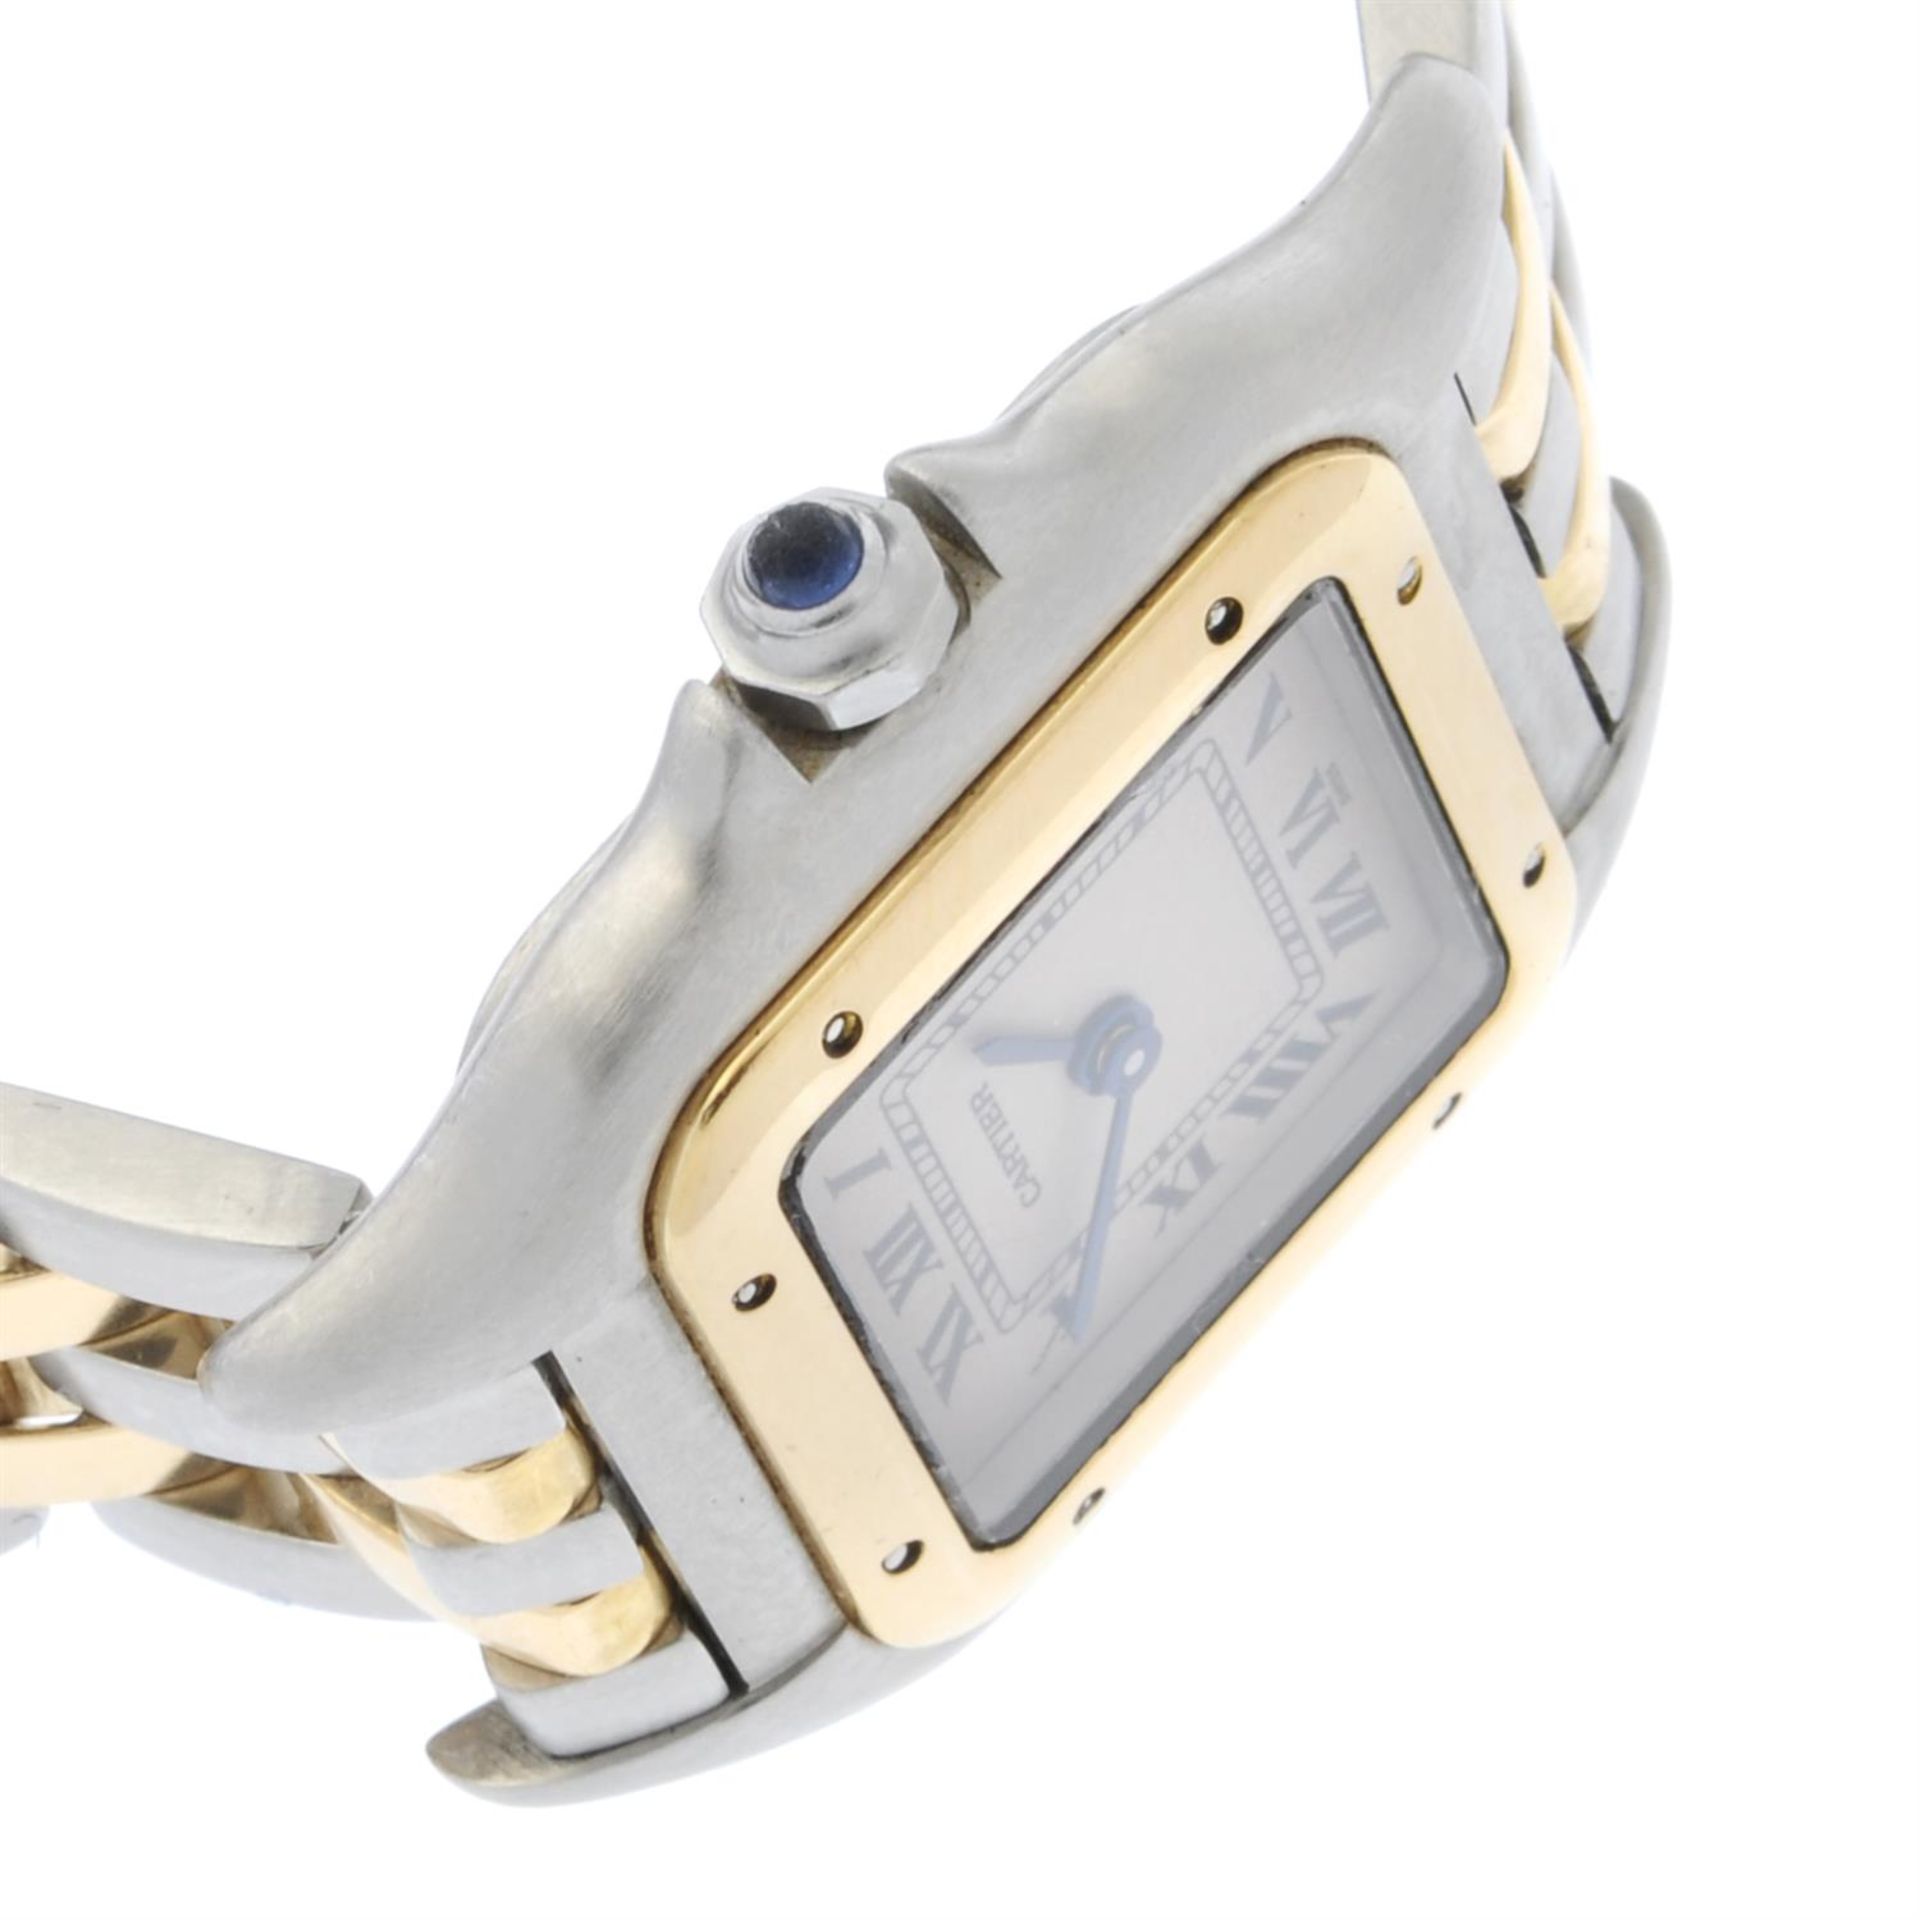 CARTIER - a bi-metal Panthere bracelet watch, 21mm. - Image 3 of 5